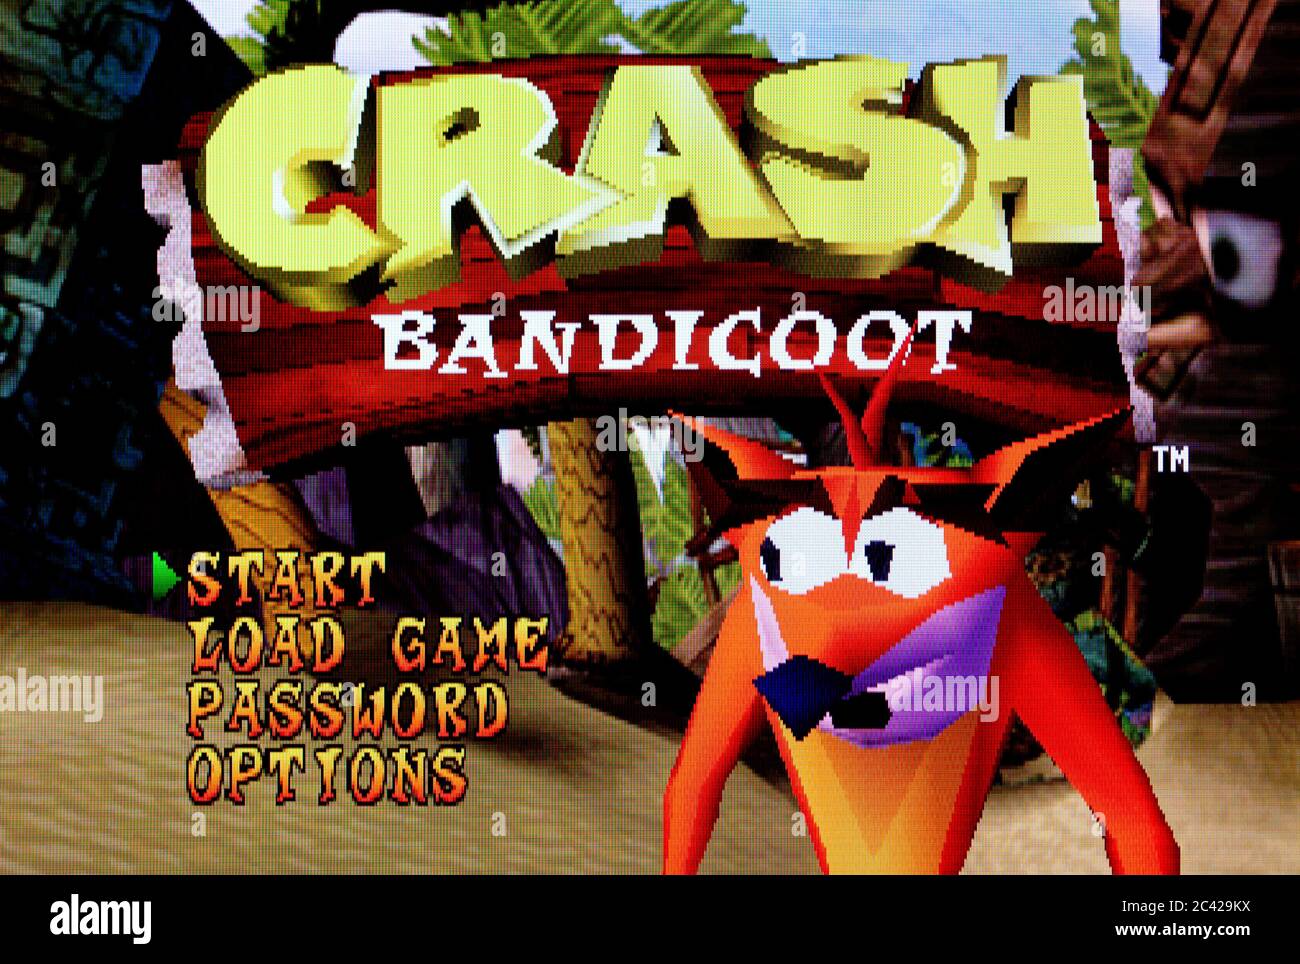 Crash Bandicoot Warped Sony Playstation  Crash bandicoot, Videogames, Crash  jogo